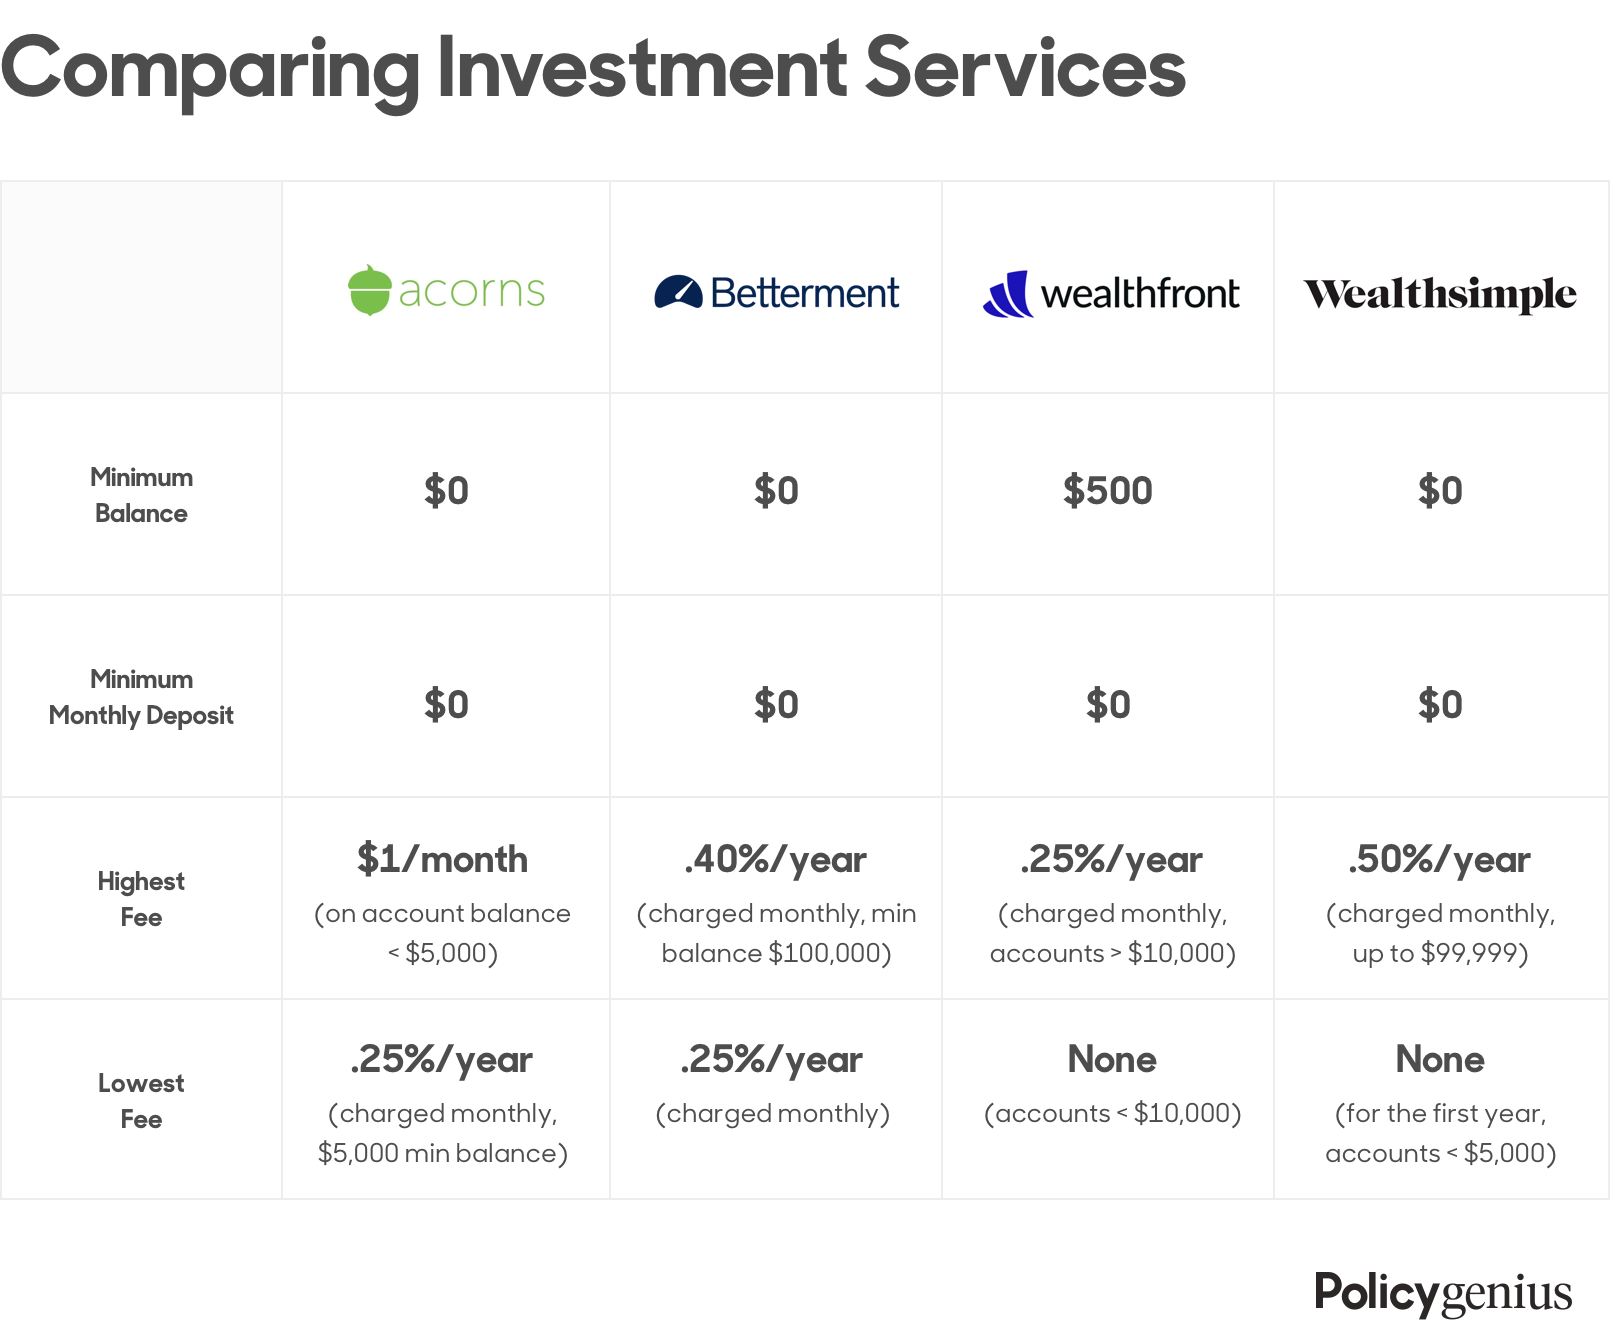 Comparing Investment